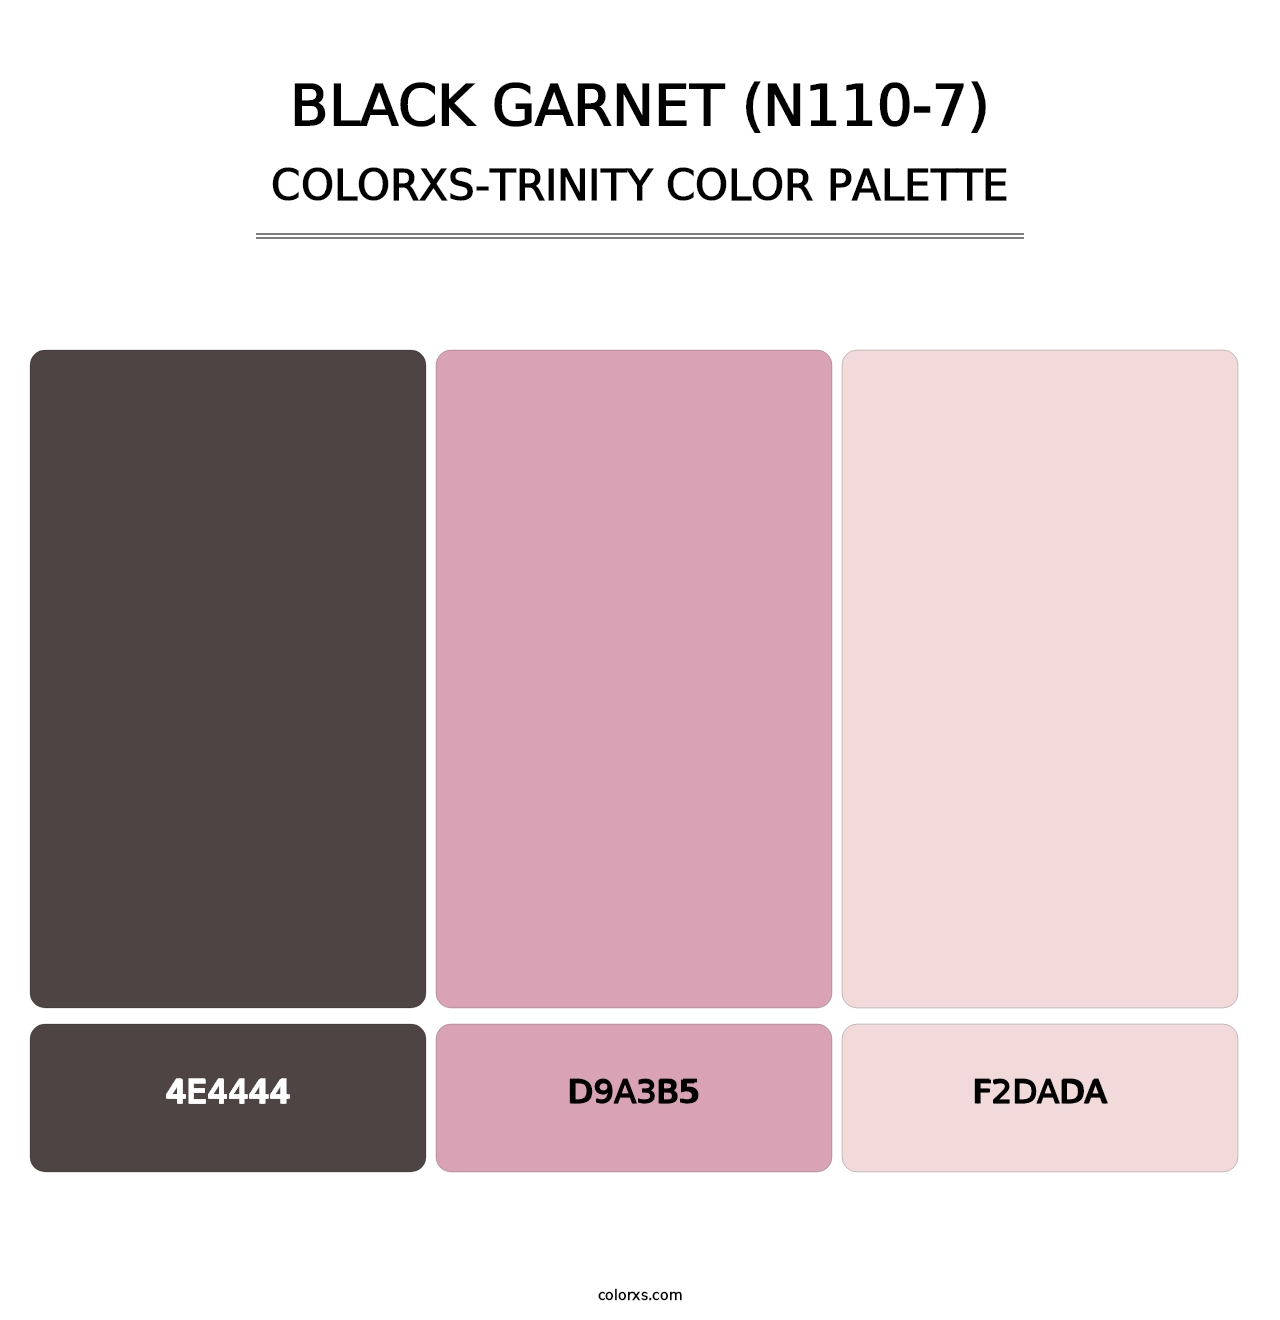 Black Garnet (N110-7) - Colorxs Trinity Palette